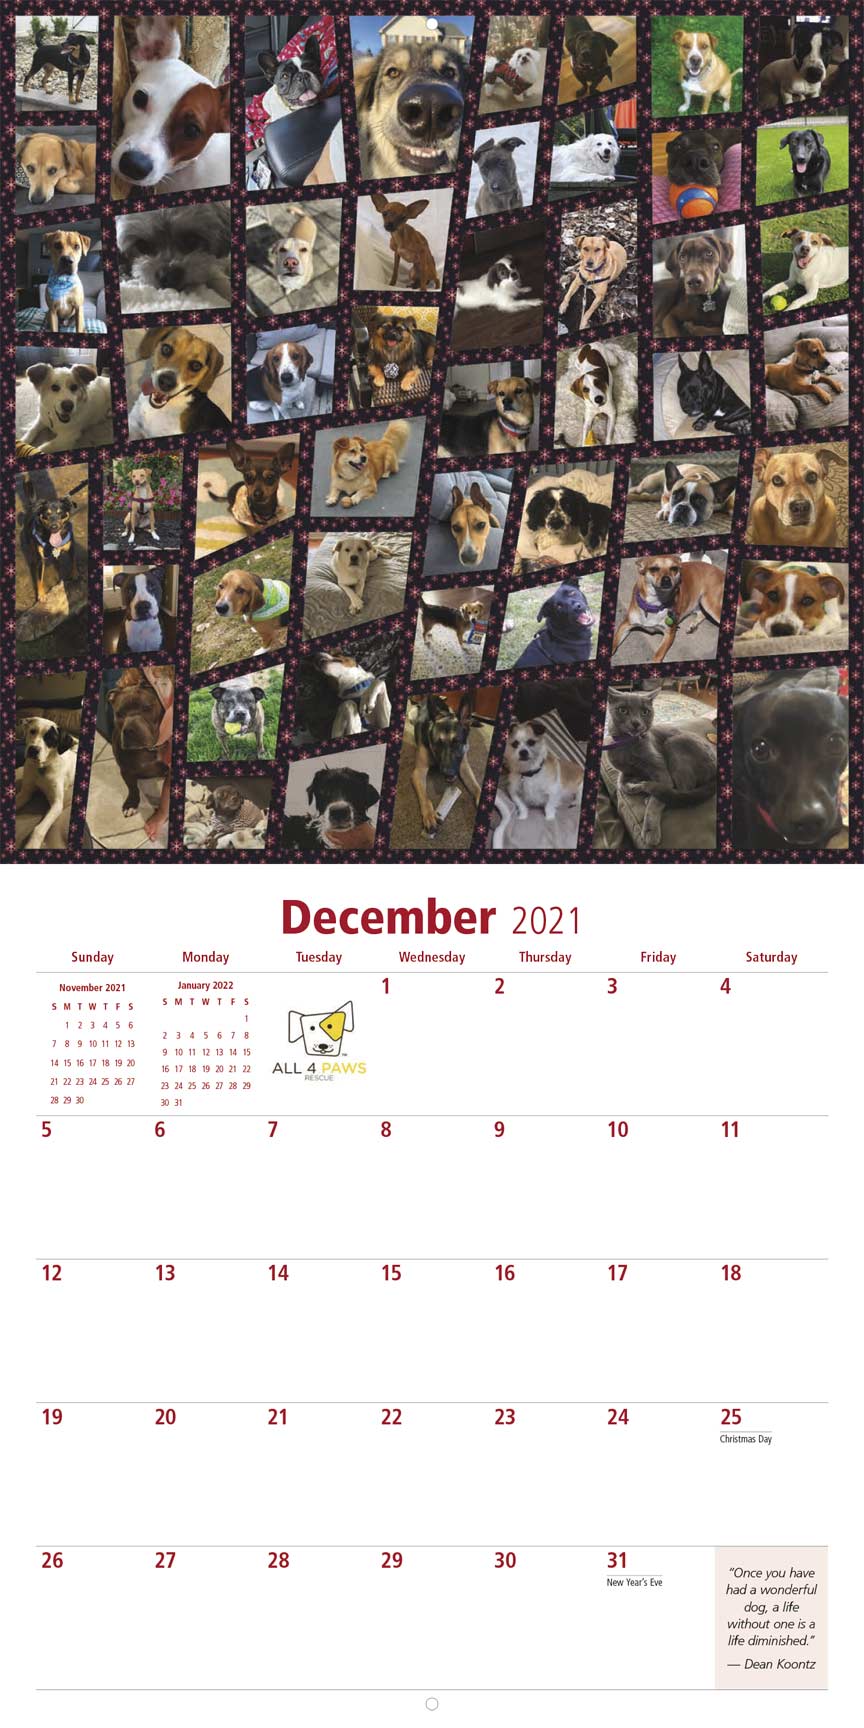 All 4 Paws Rescue 2021 Calendar Fundraising